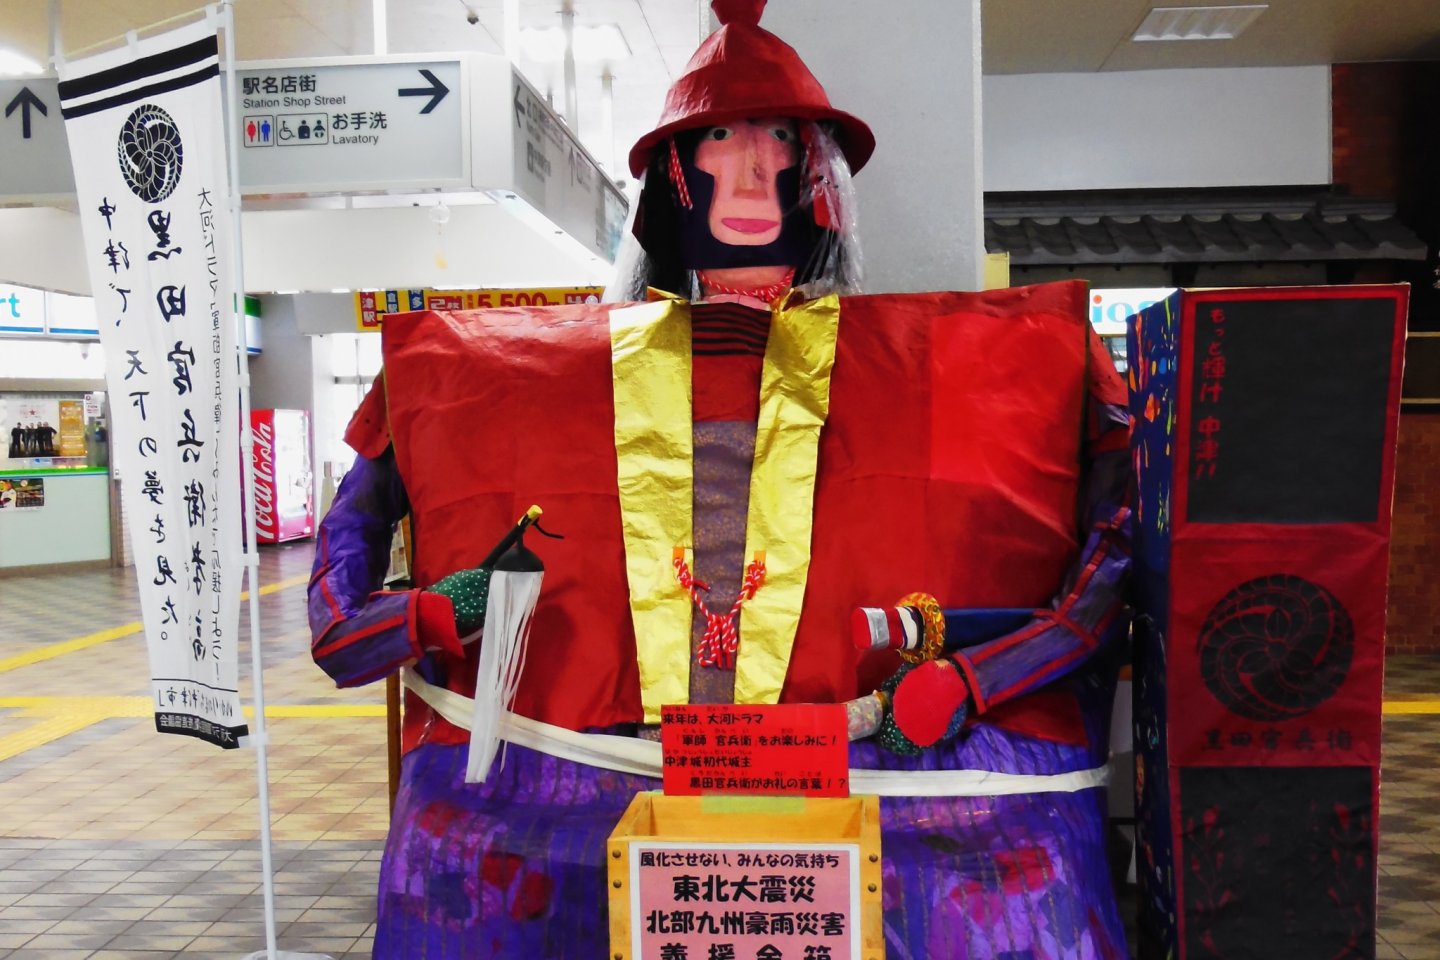 A Kanbeh Kuroda doll holding a donation box for the 3.11 earthquake